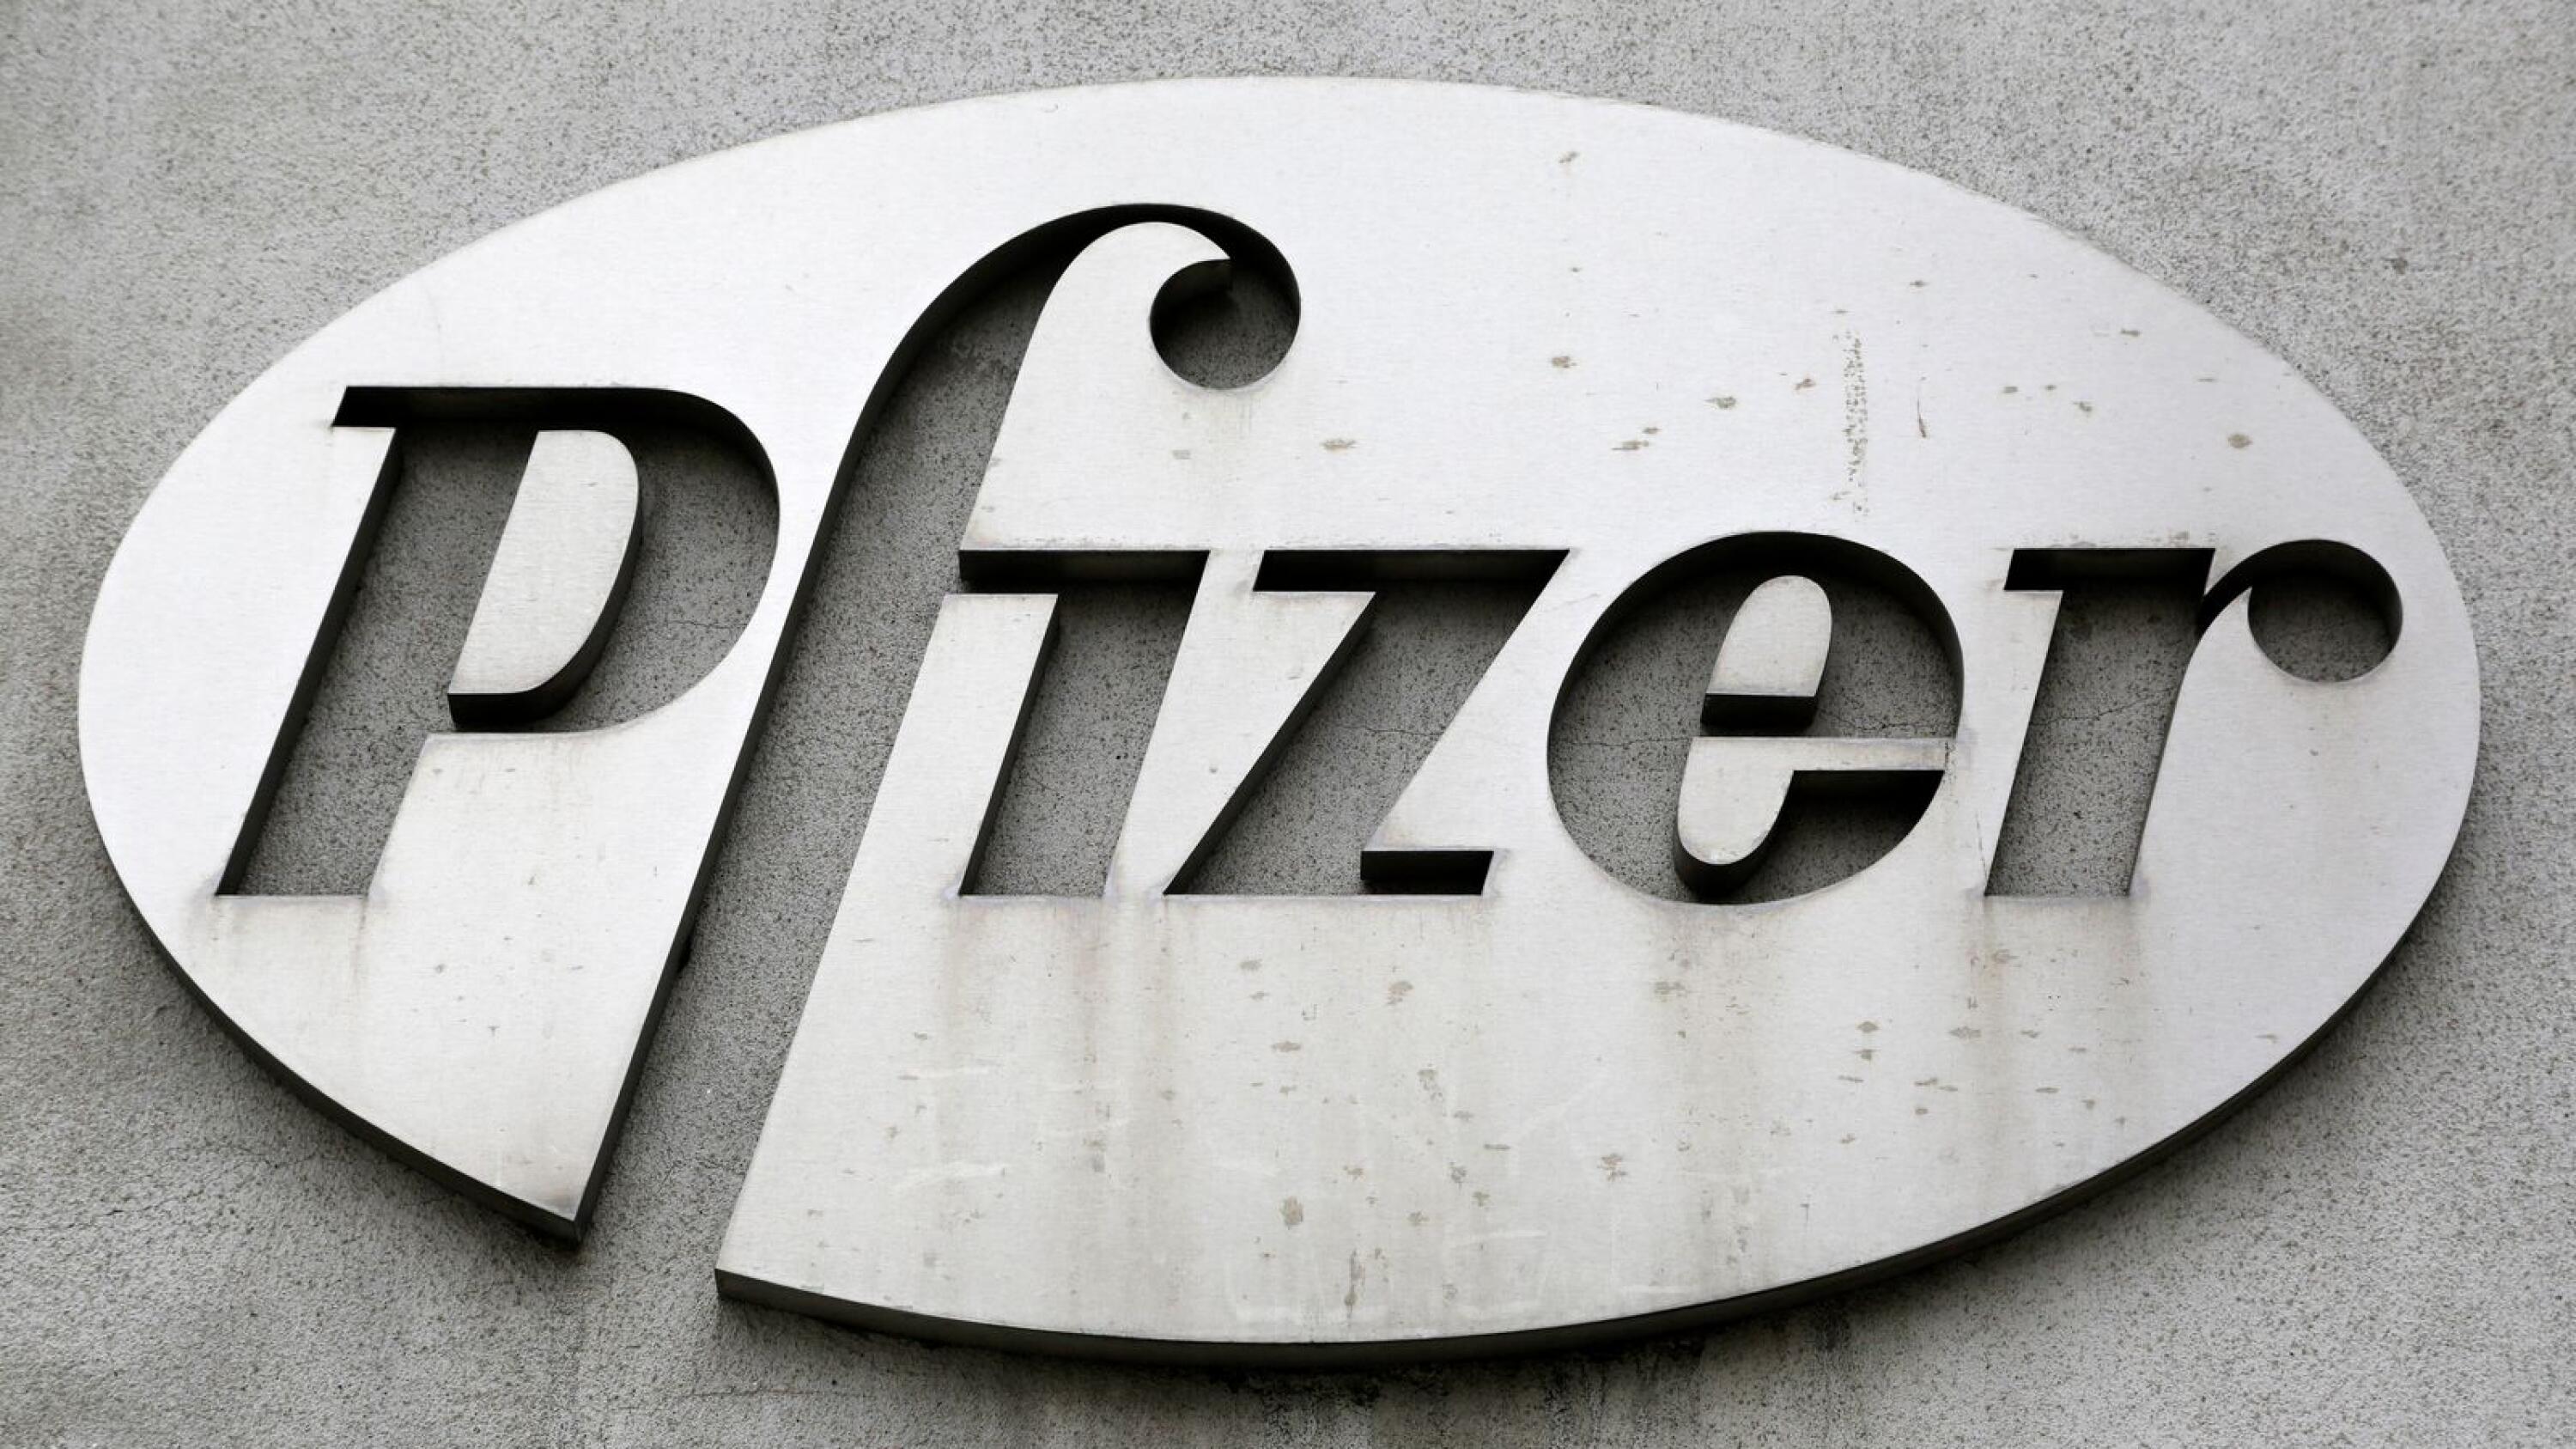 Cash-rich Pfizer snaps up maker of sickle cell disease treatment for $5.4 billion